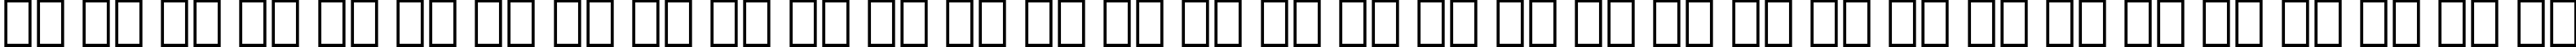 Пример написания русского алфавита шрифтом Copperplate Gothic Condensed BT